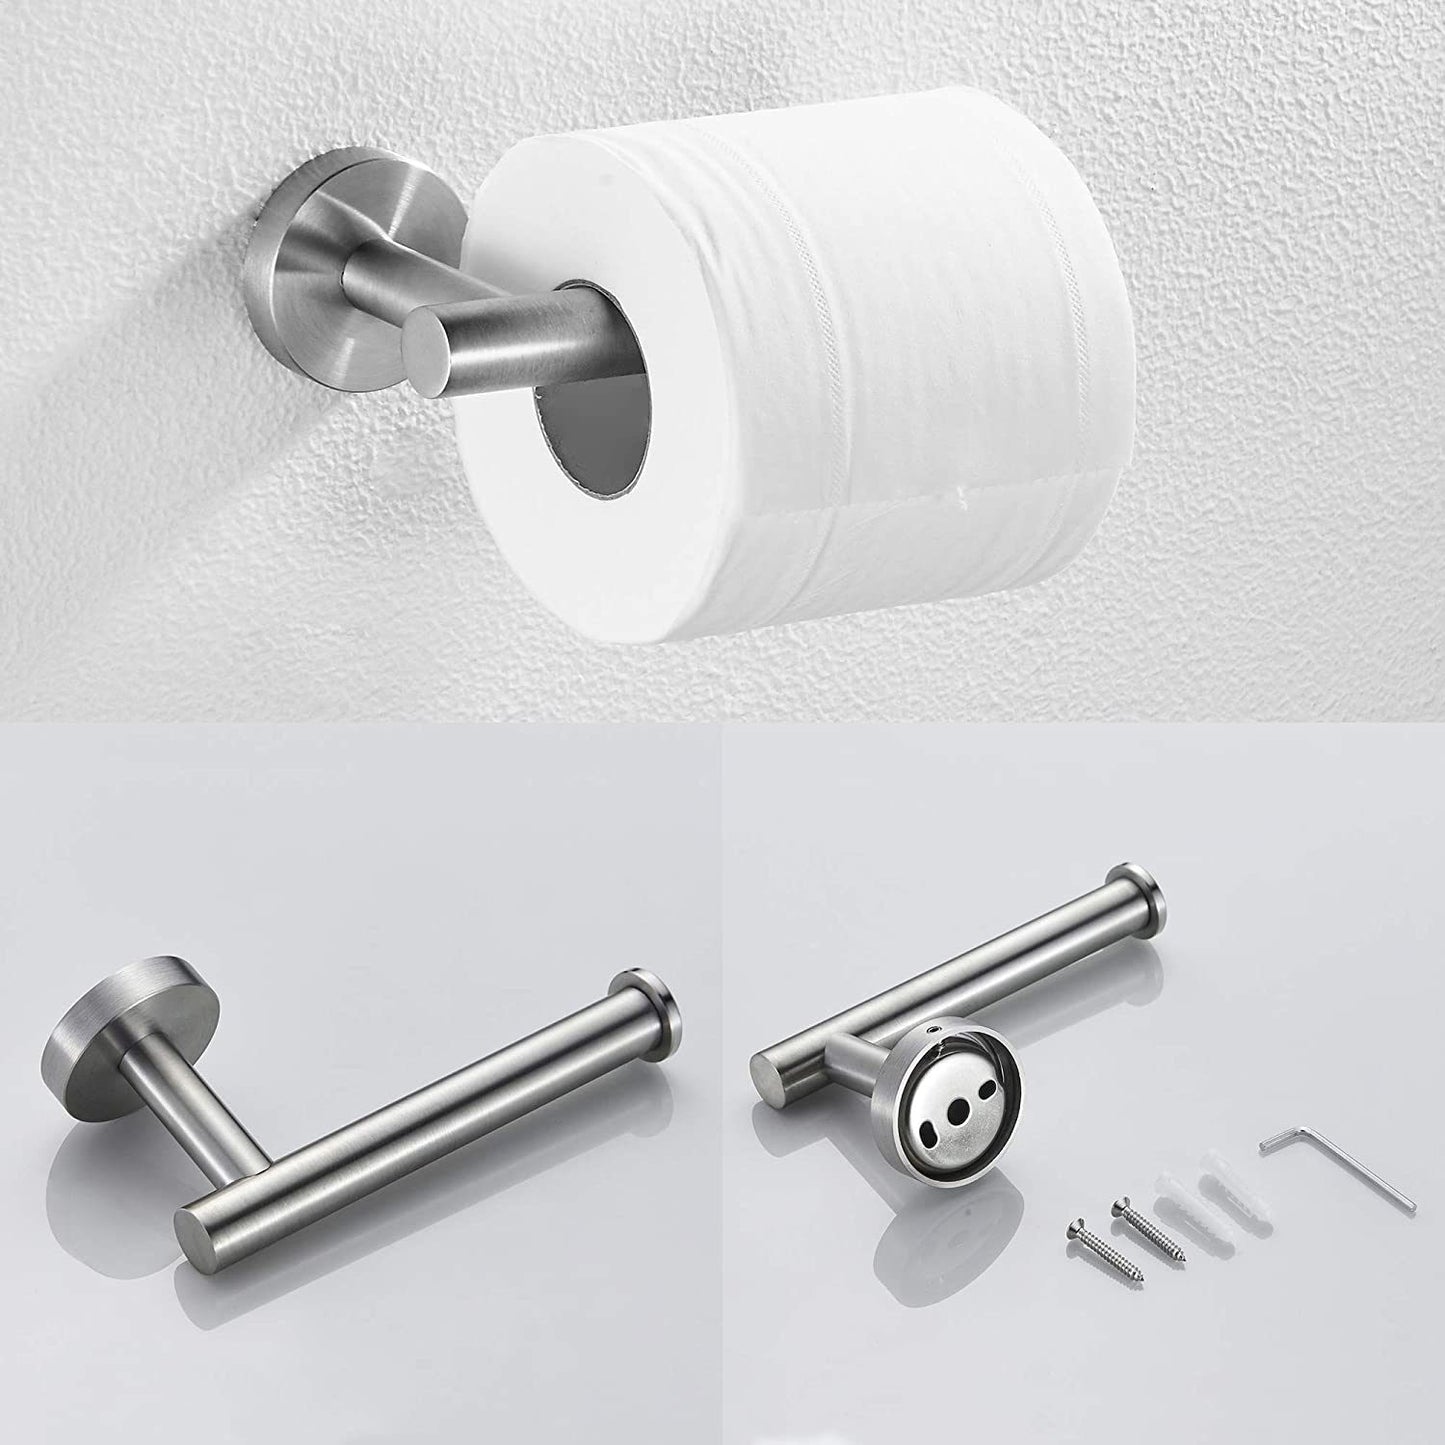 3-Piece Bathroom Hardware Set with Toilet Paper Holder, Towel Ring, Adjustable Towel Bar